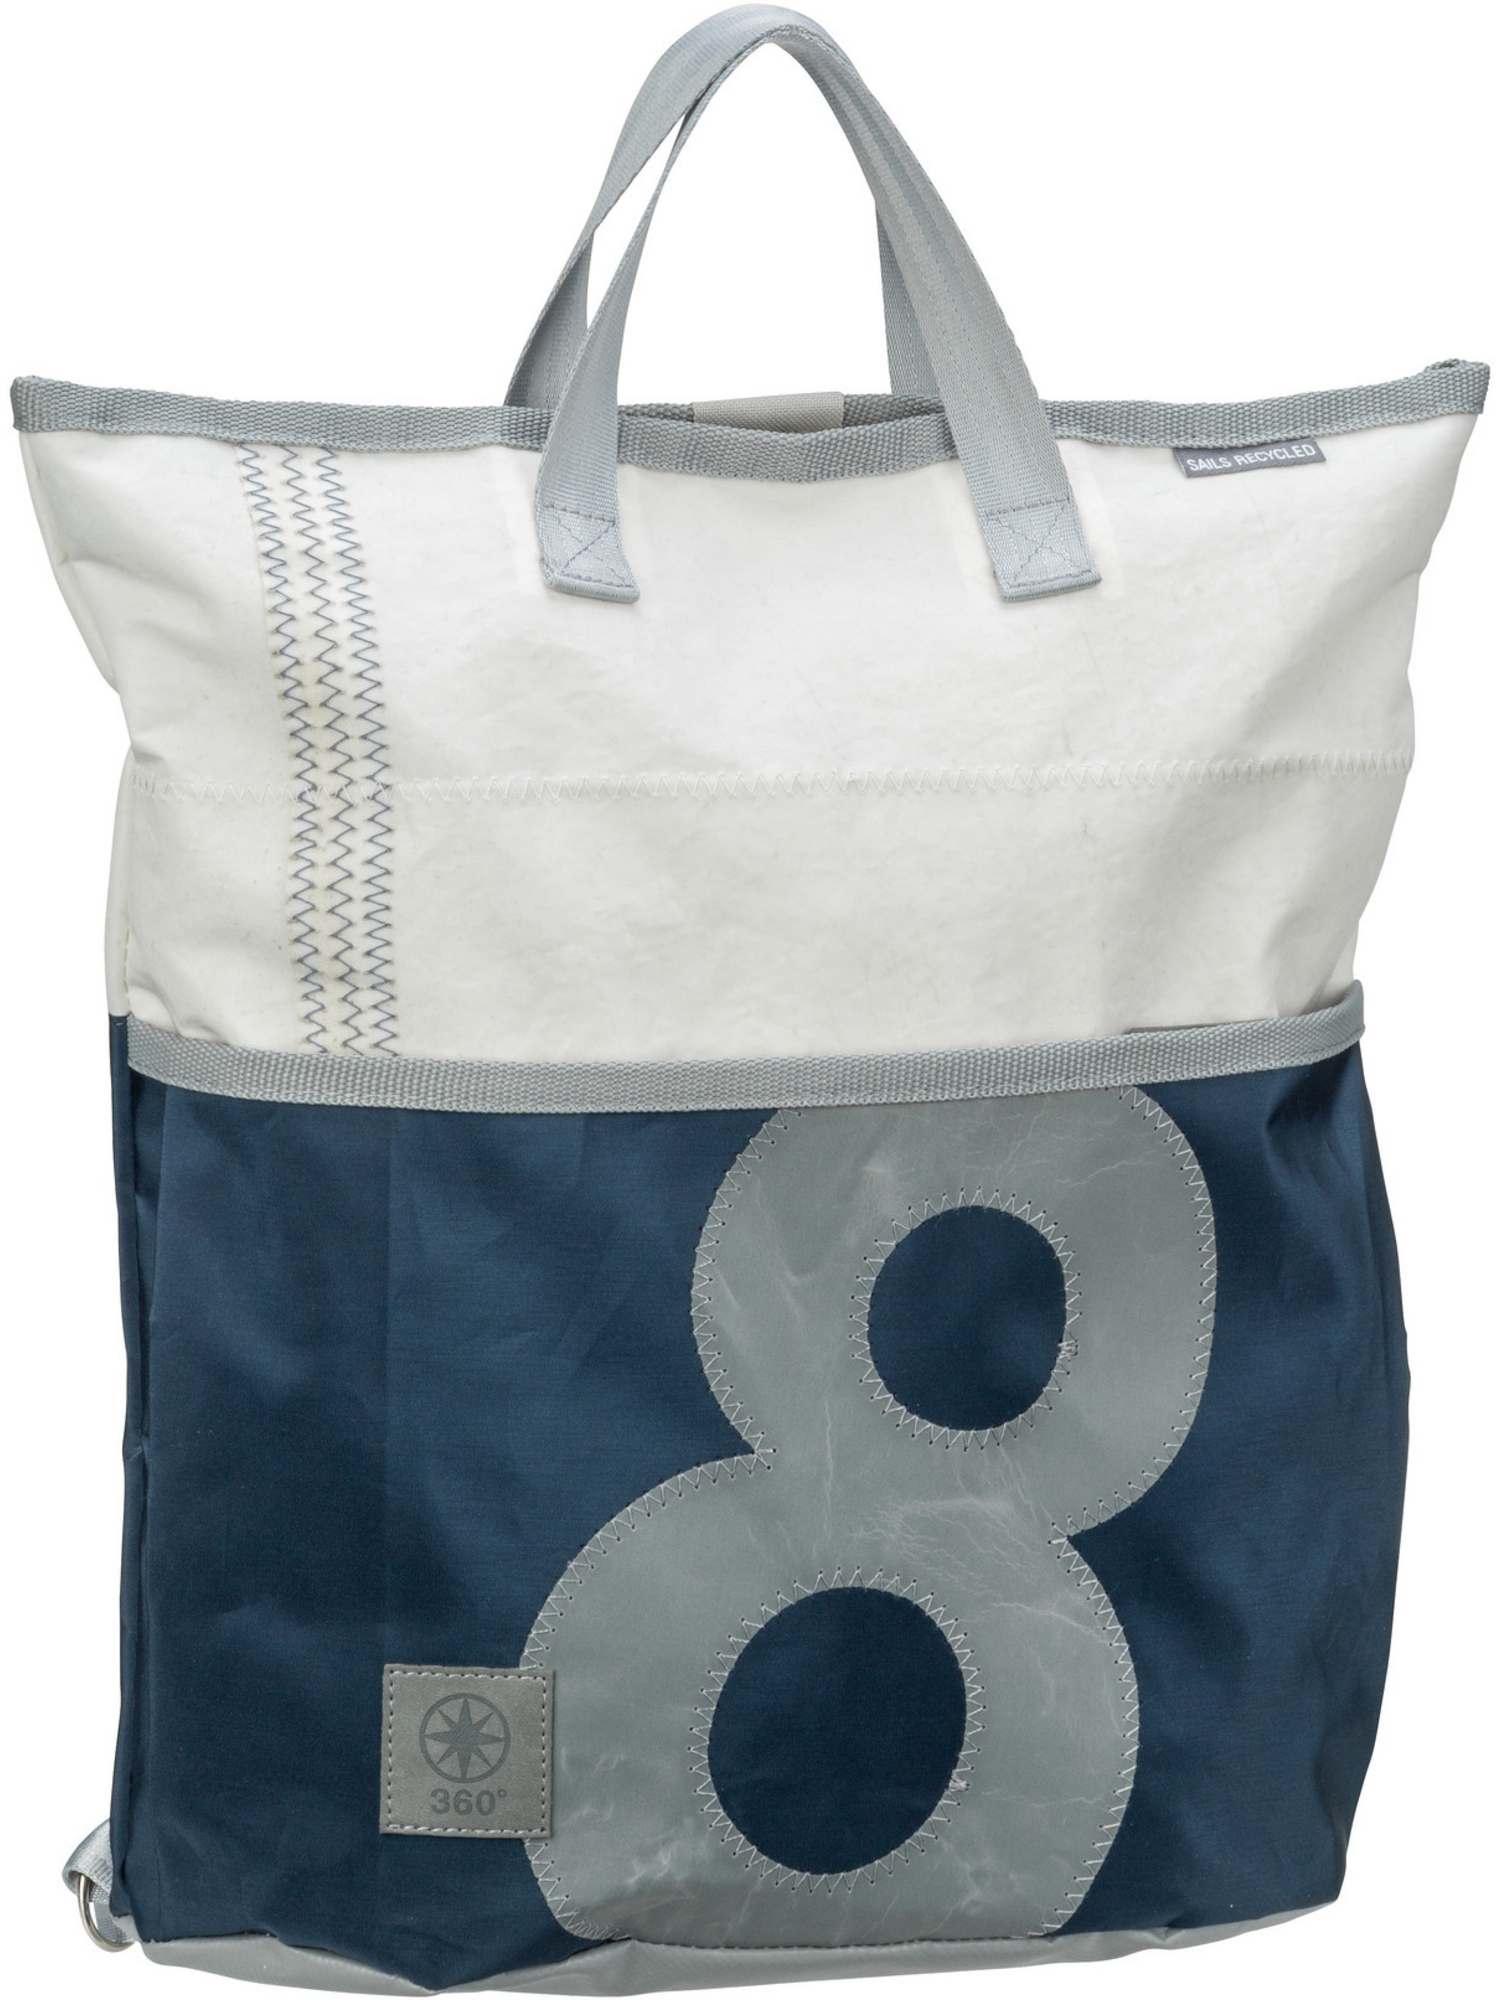 Рюкзак 360 grad/Backpack Ketsch Mini, цвет Weiß/Blau mit grauer Zahl